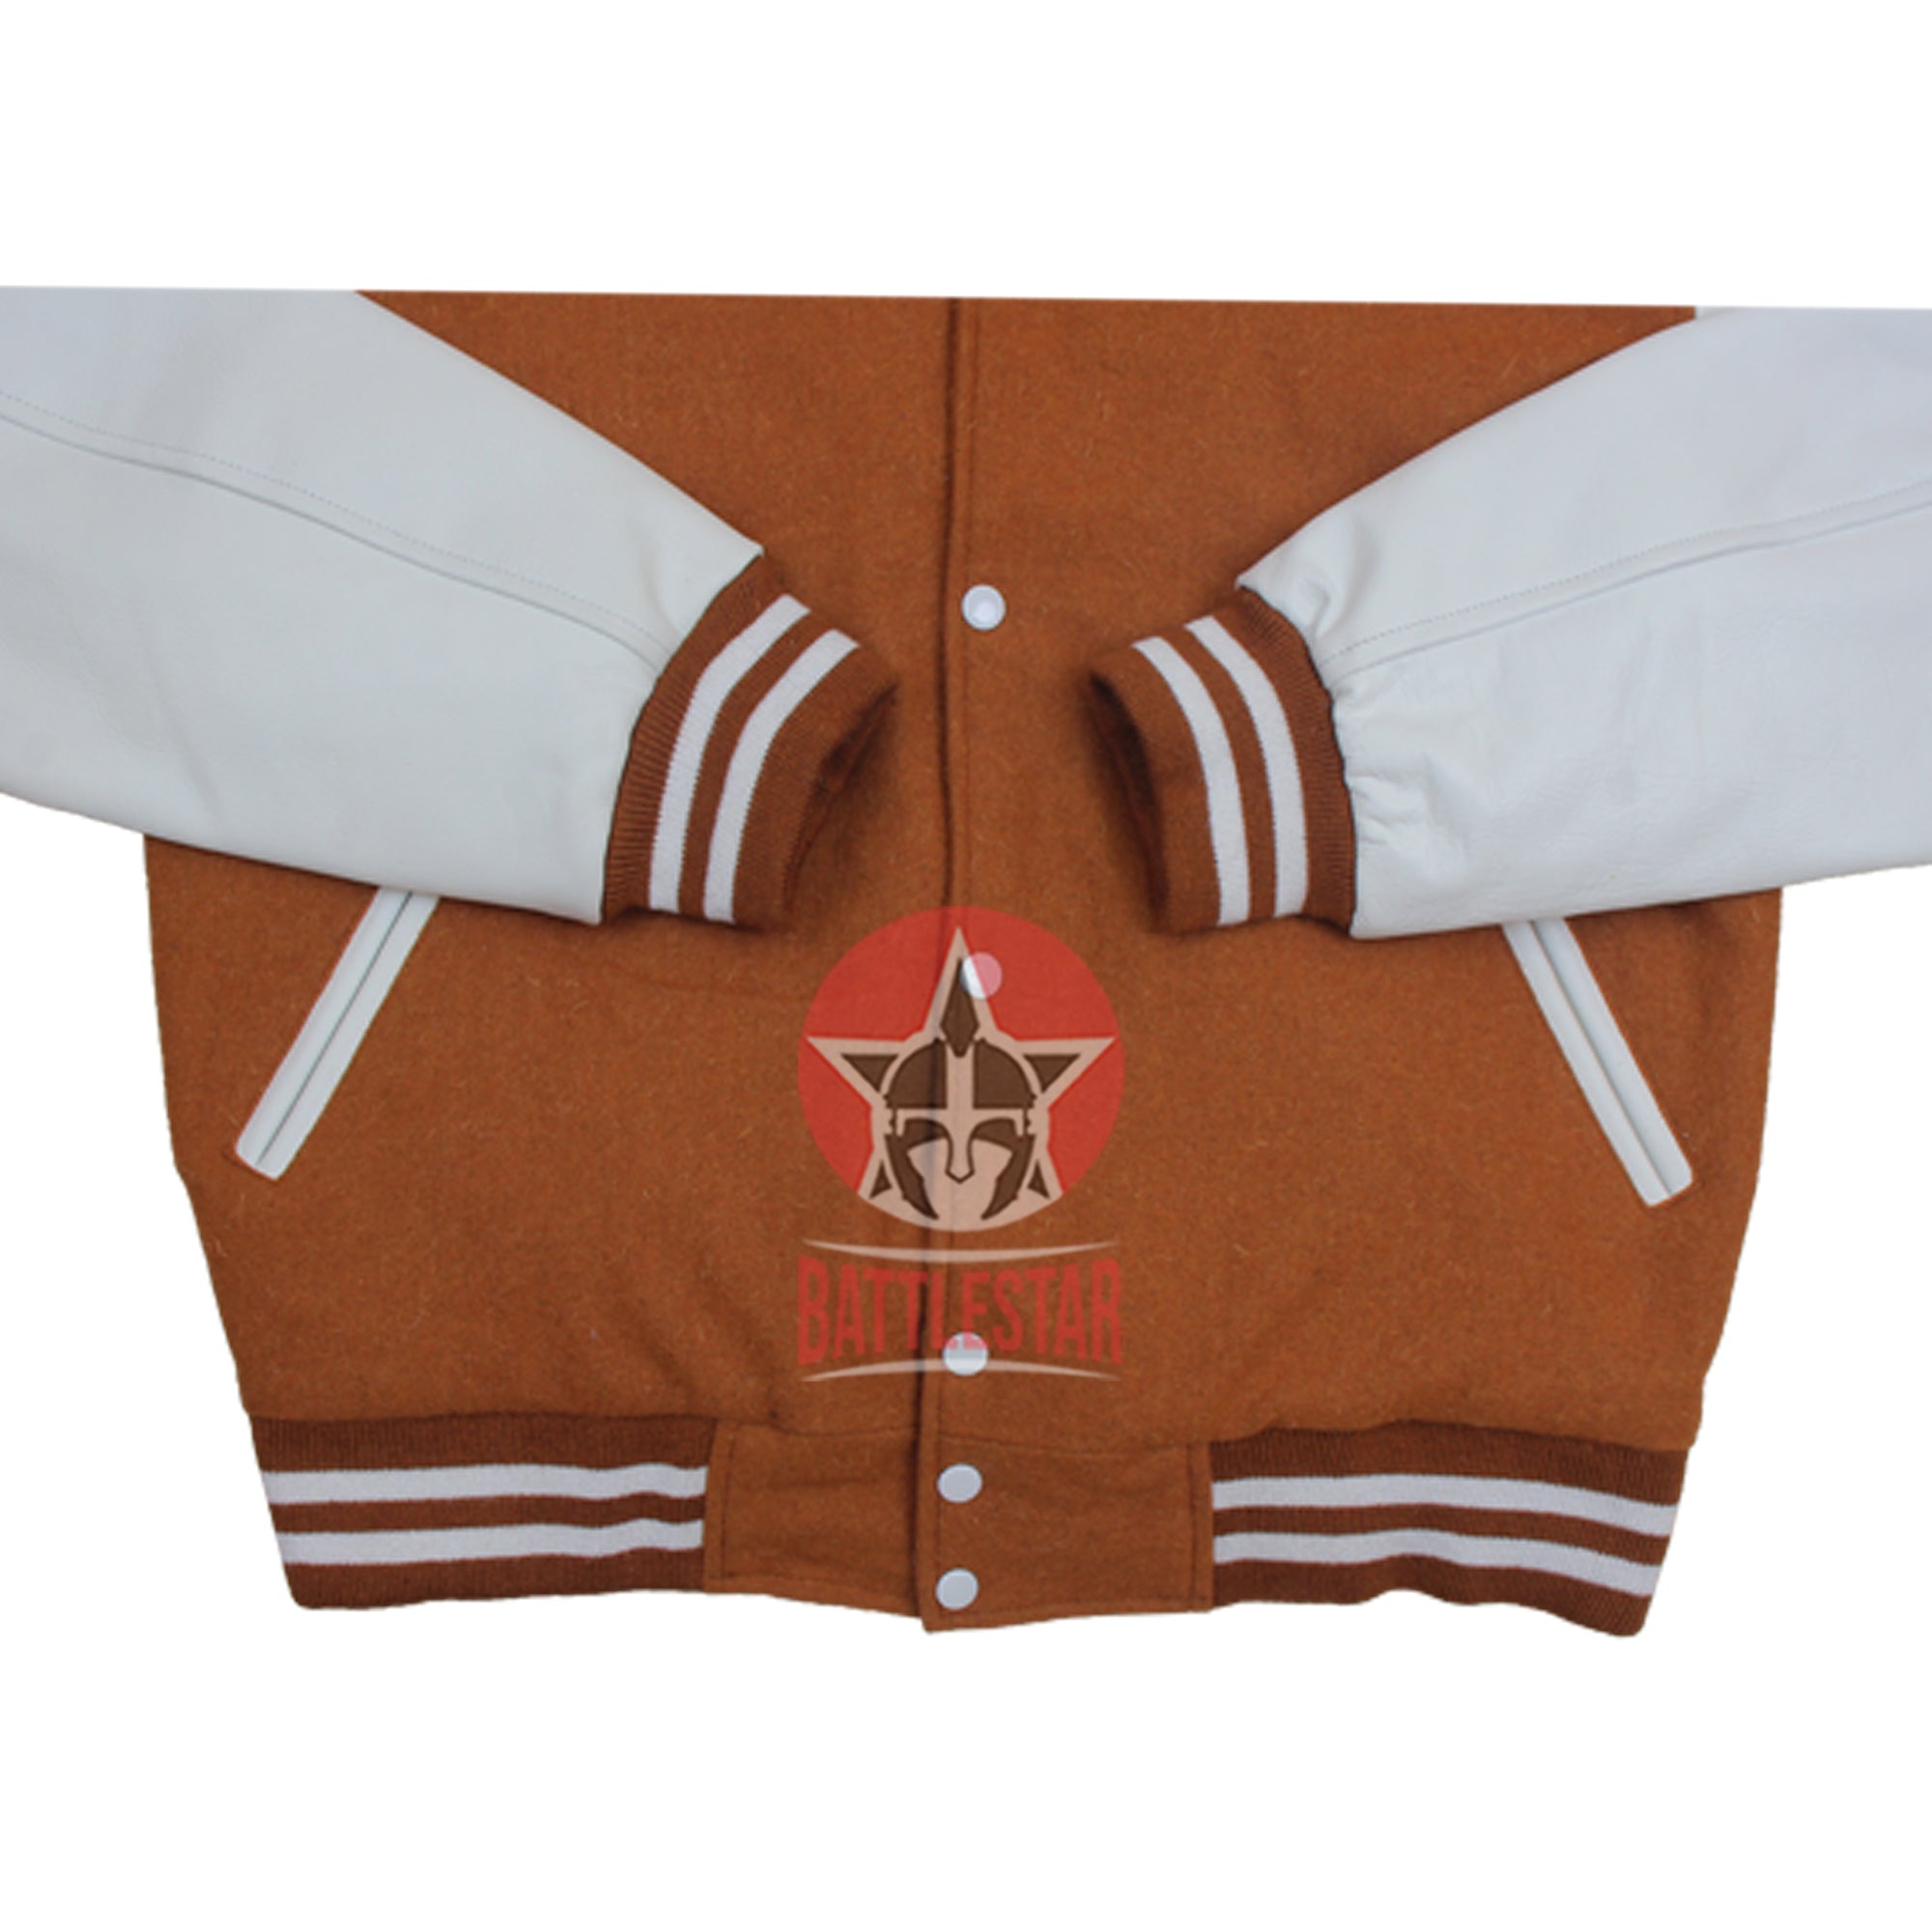 Brown Wool White Leather Sleeves Varsity Baseball Jacket